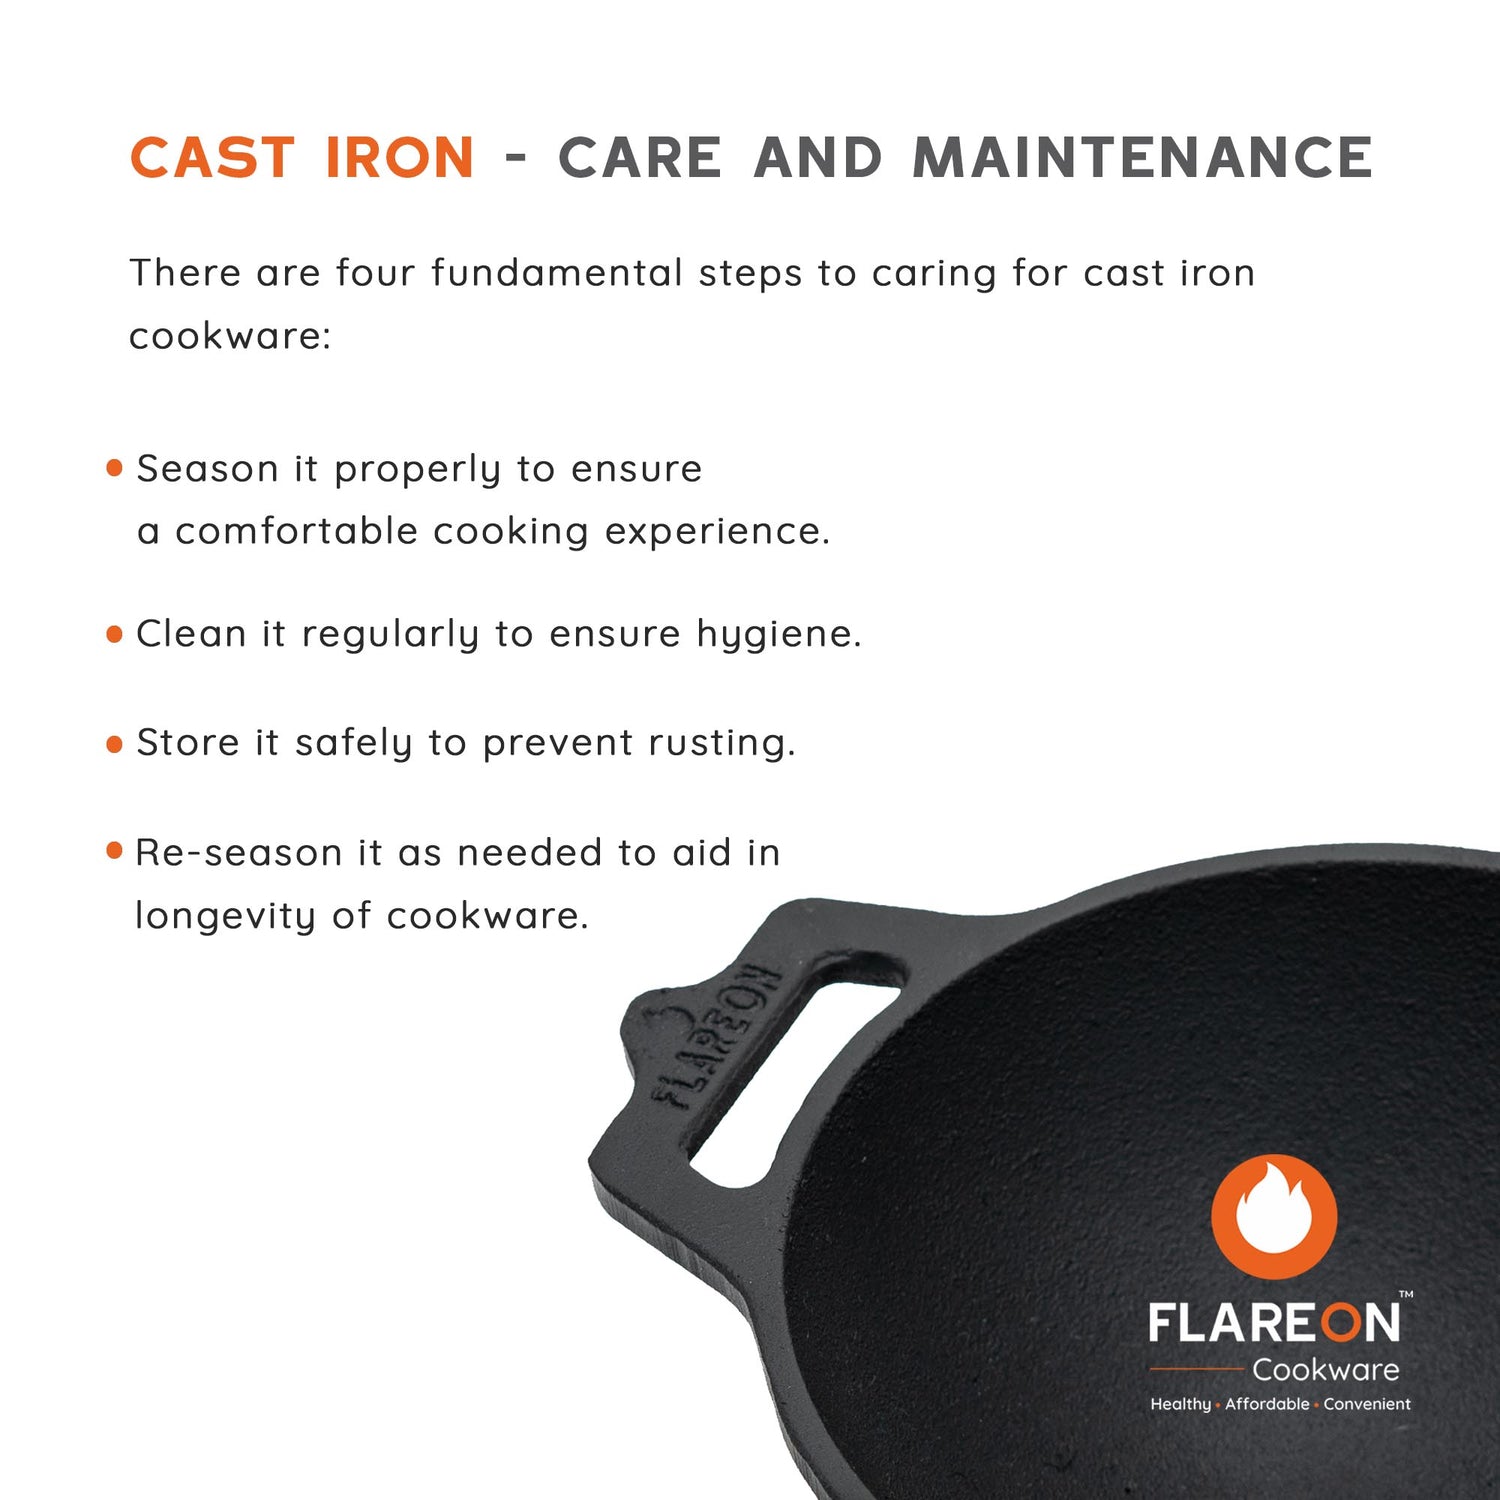 FlareOn's Cast Iron Kadai 8-Inch - Care and Maintenance